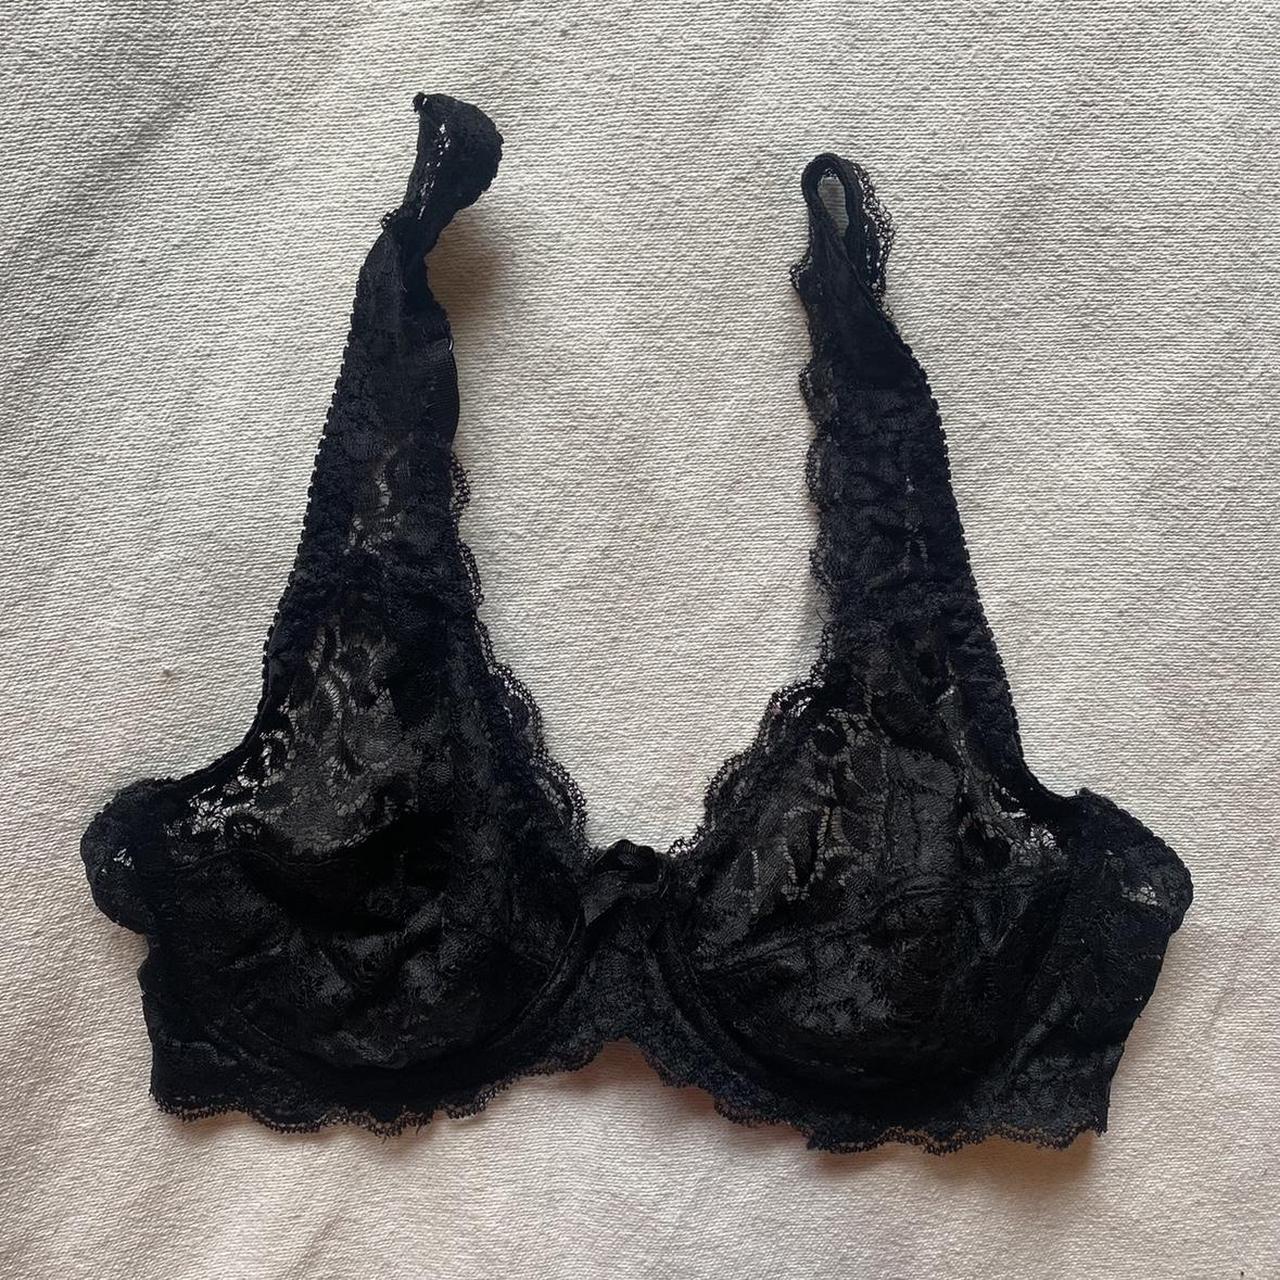 black lace bra - size: 34c - no issues so cute - Depop